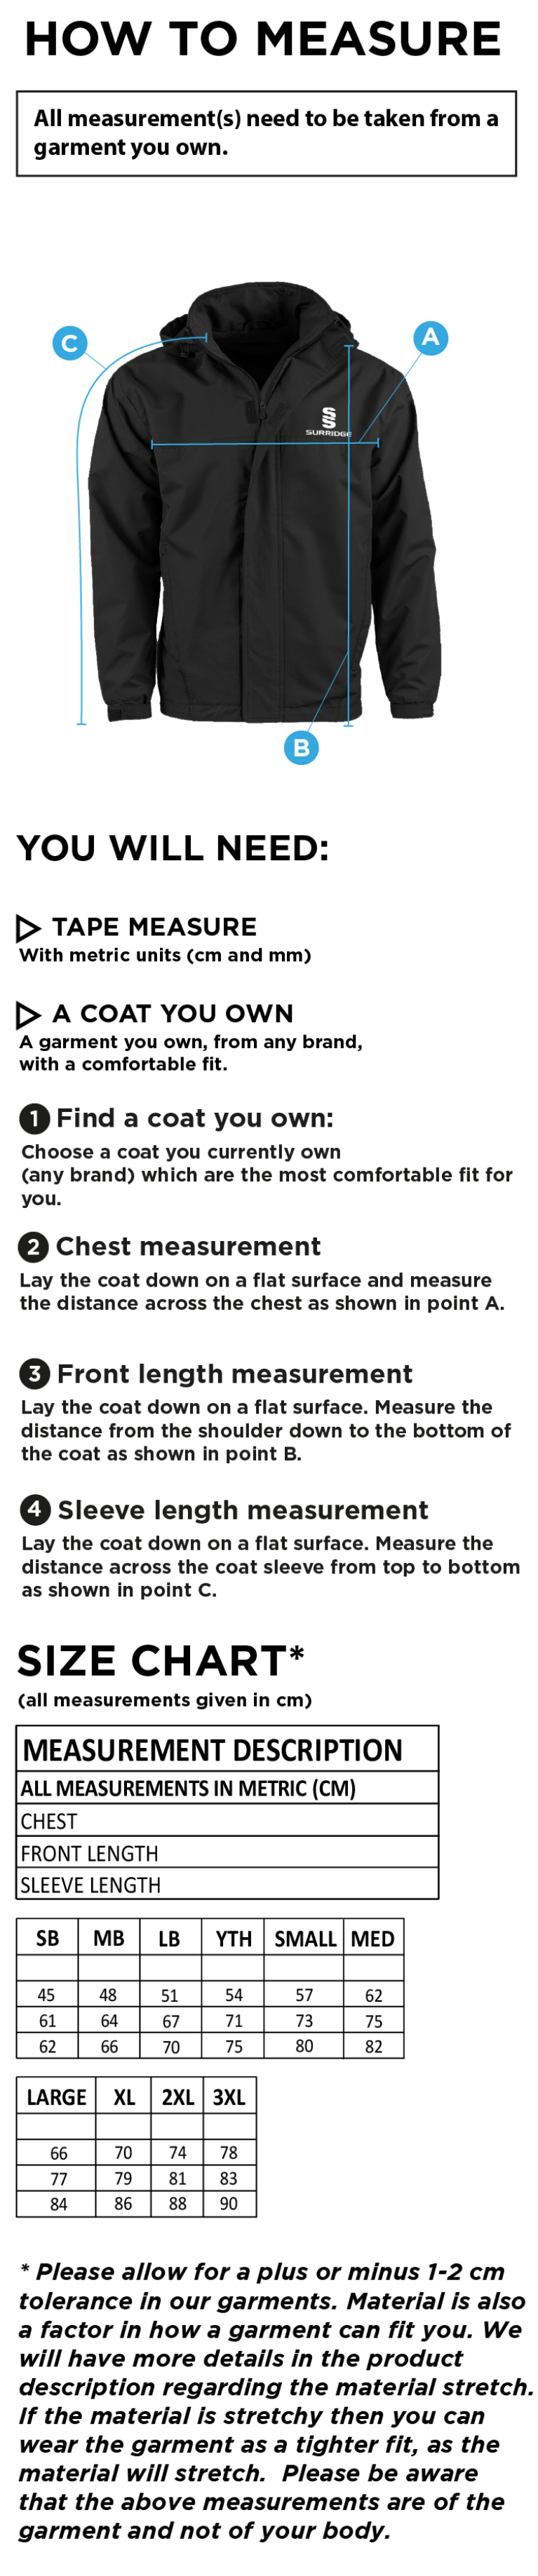 Gloucester Ladies Netball Fleece Lined Jacket - Size Guide